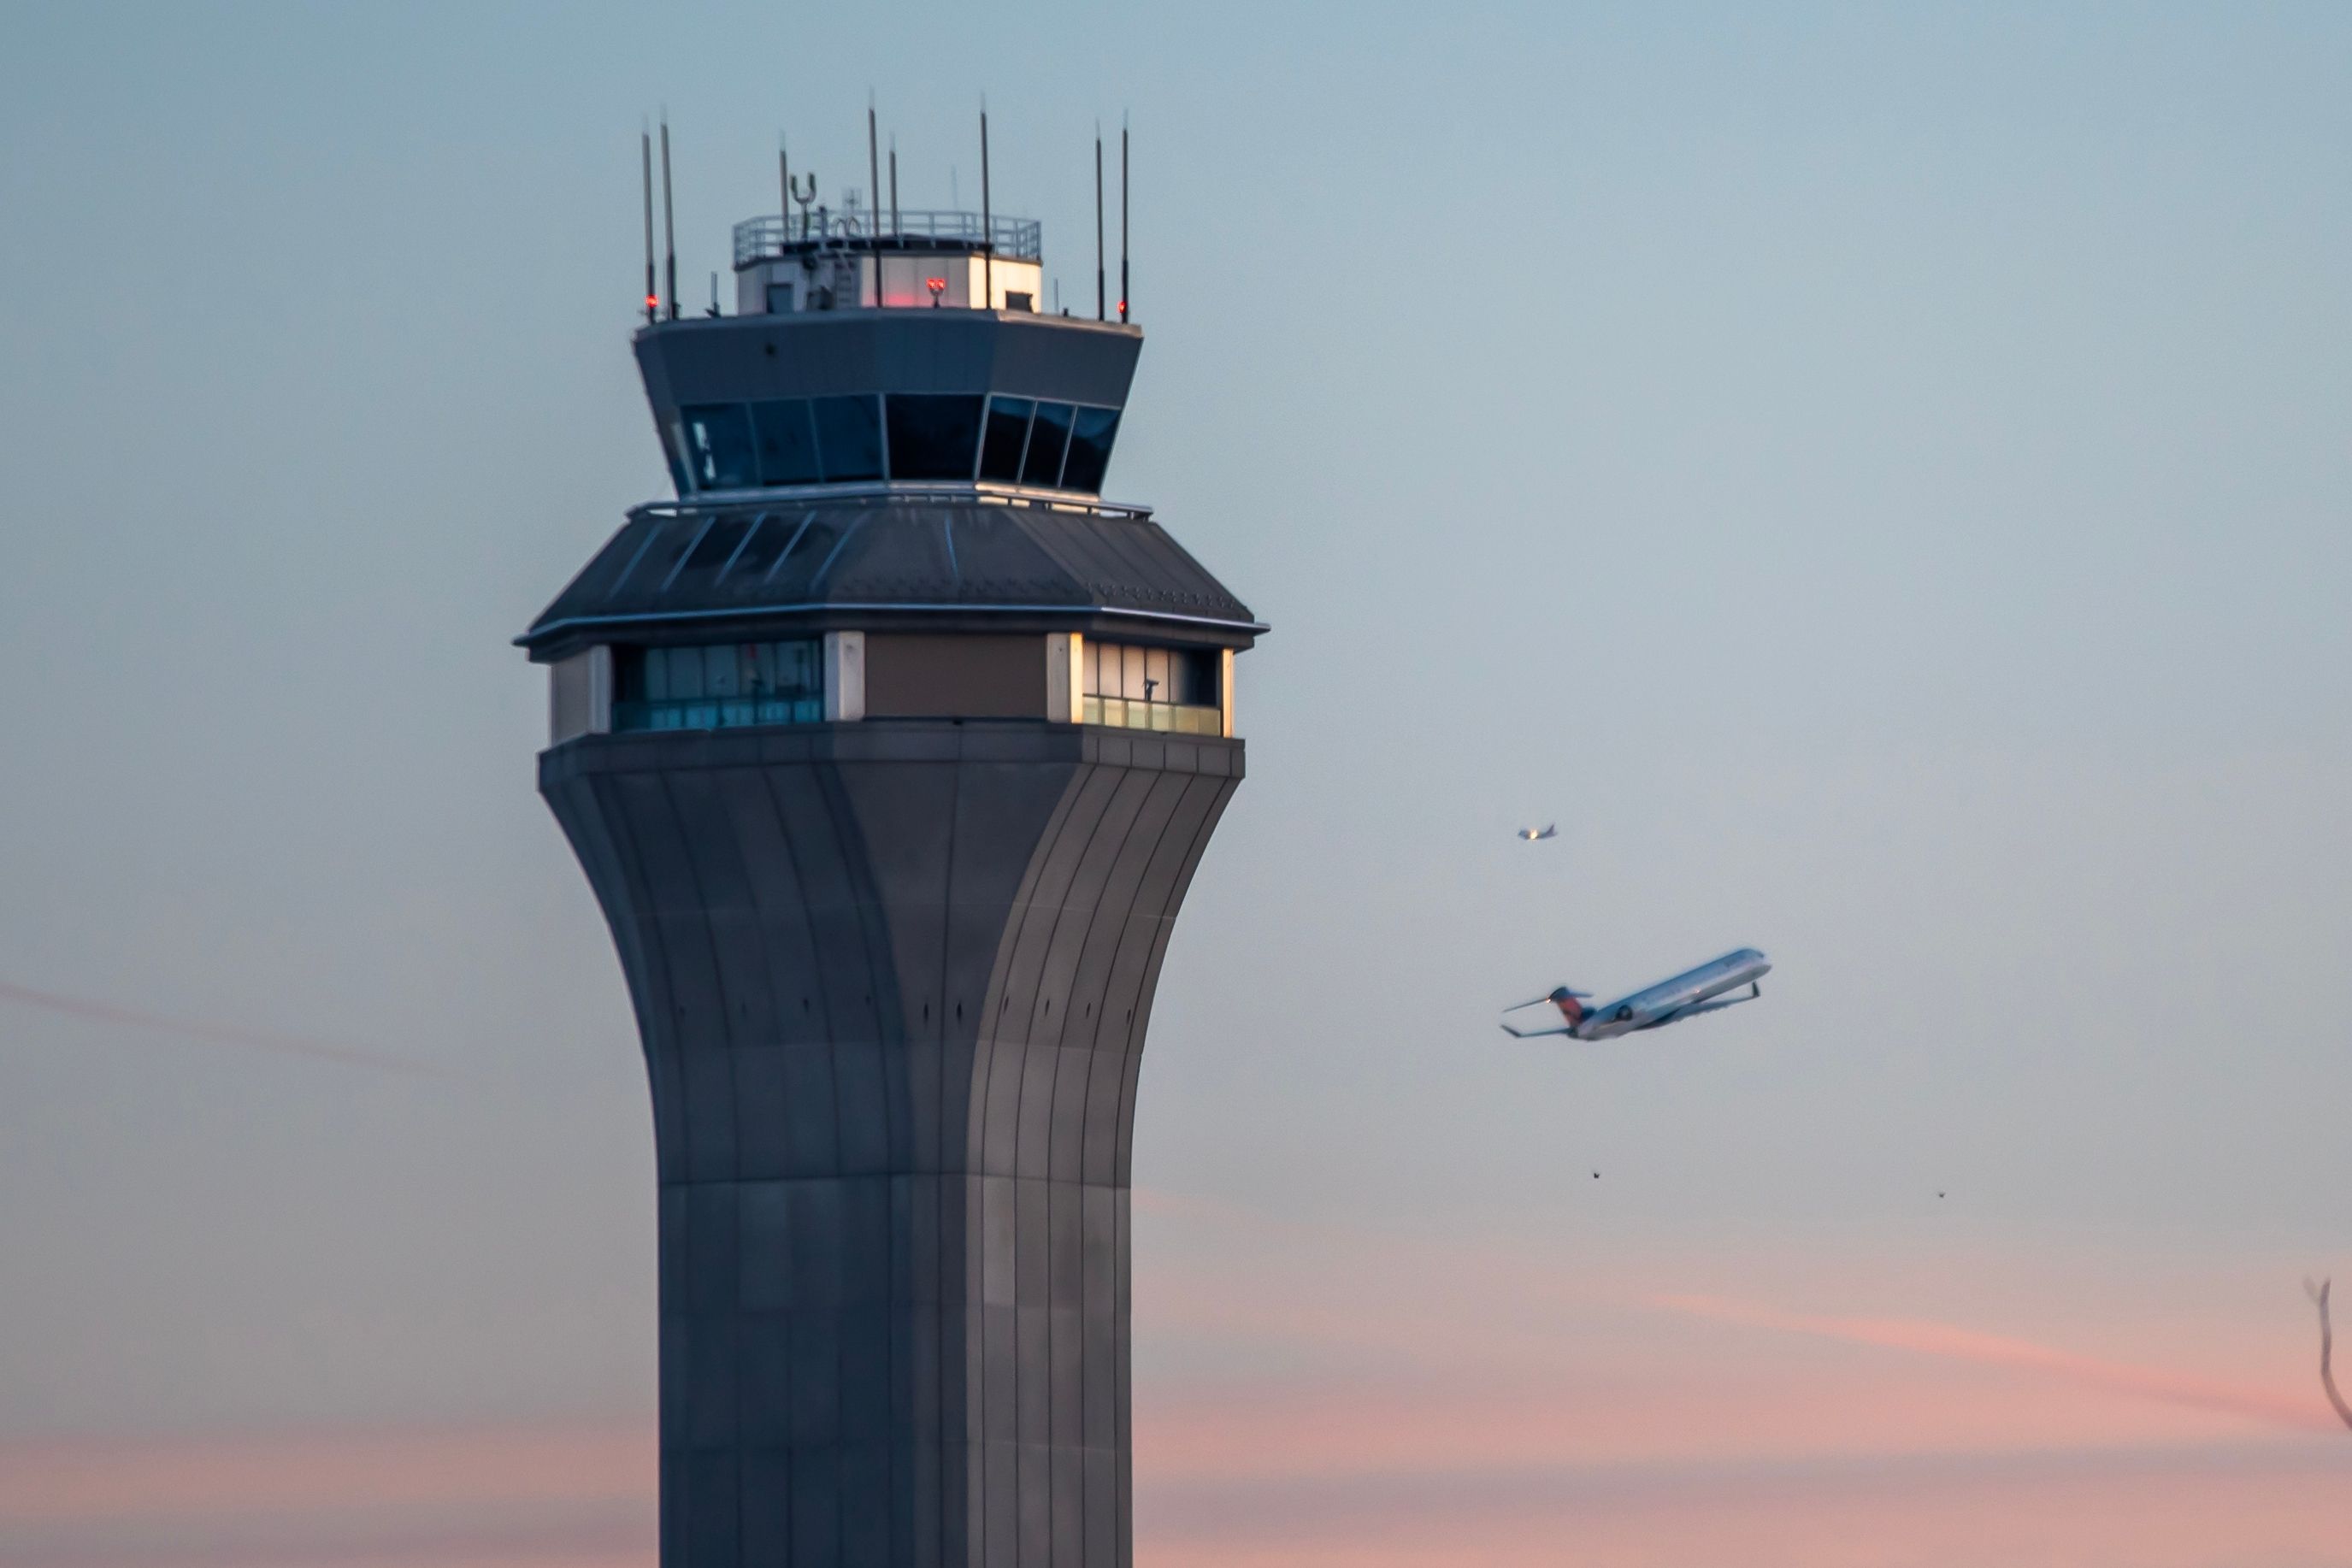 An aircraft flying behind an Air traffic control tower.